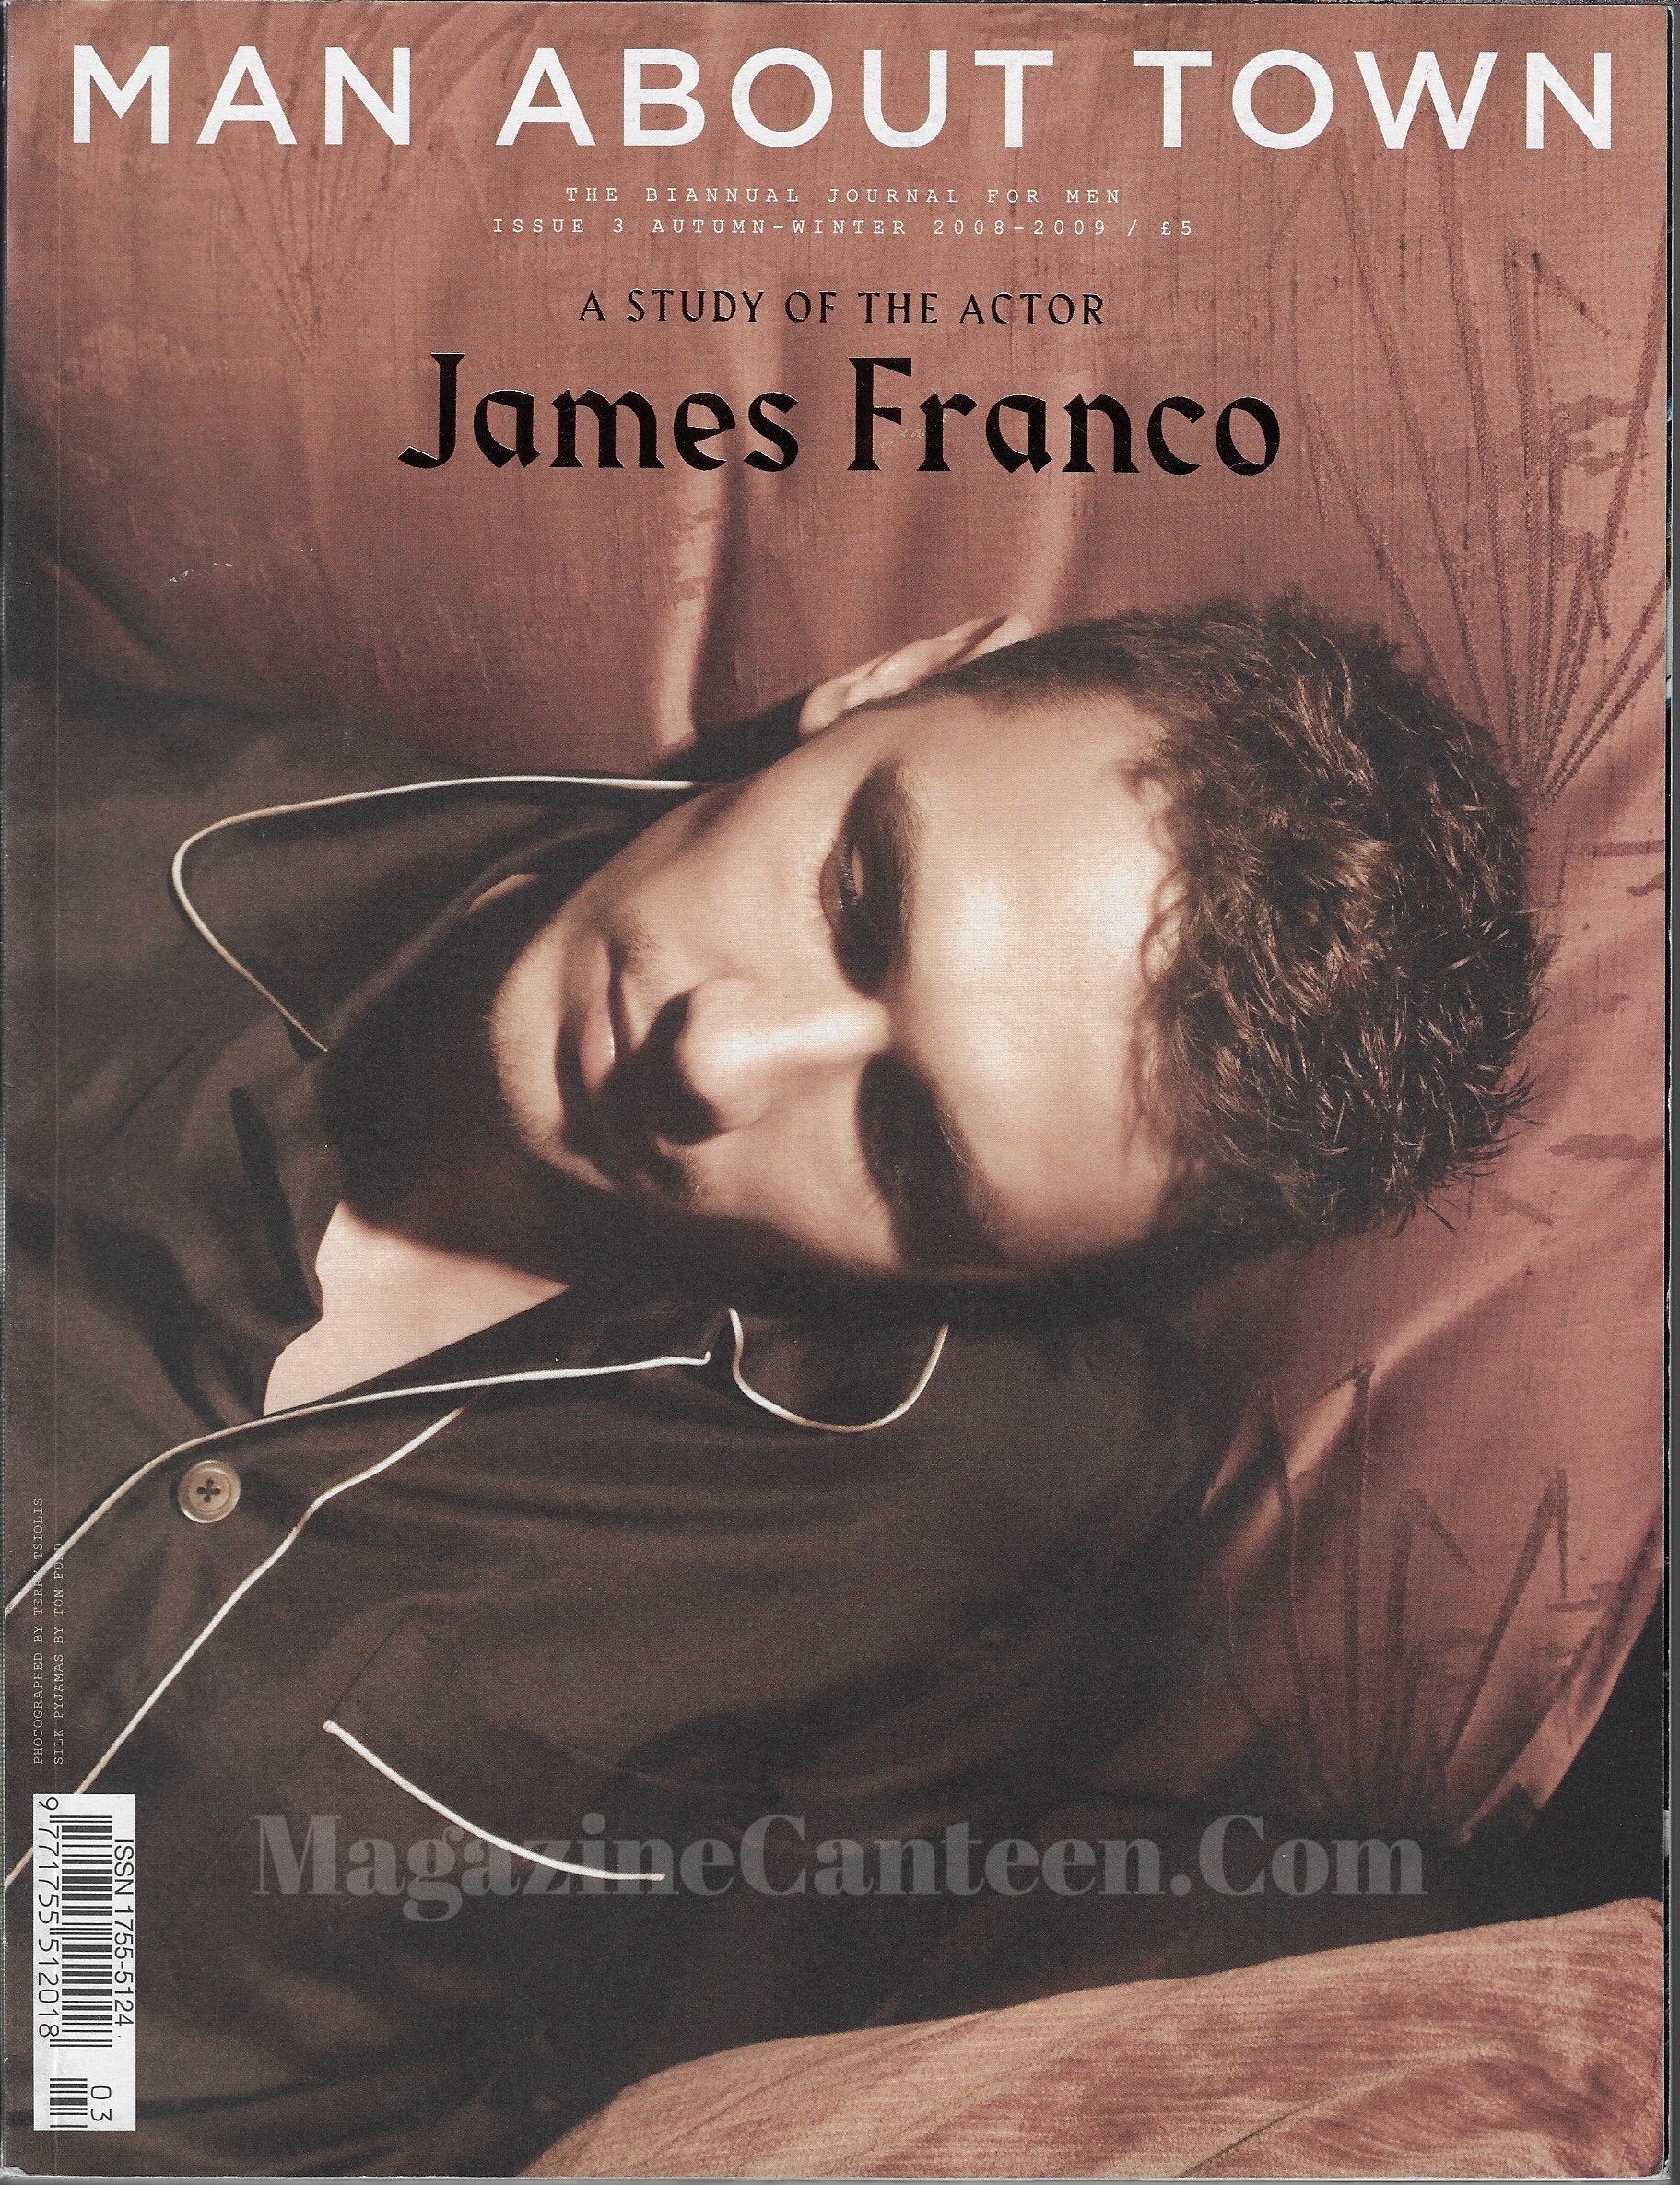 Man About Town Magazine - James Franco 2008